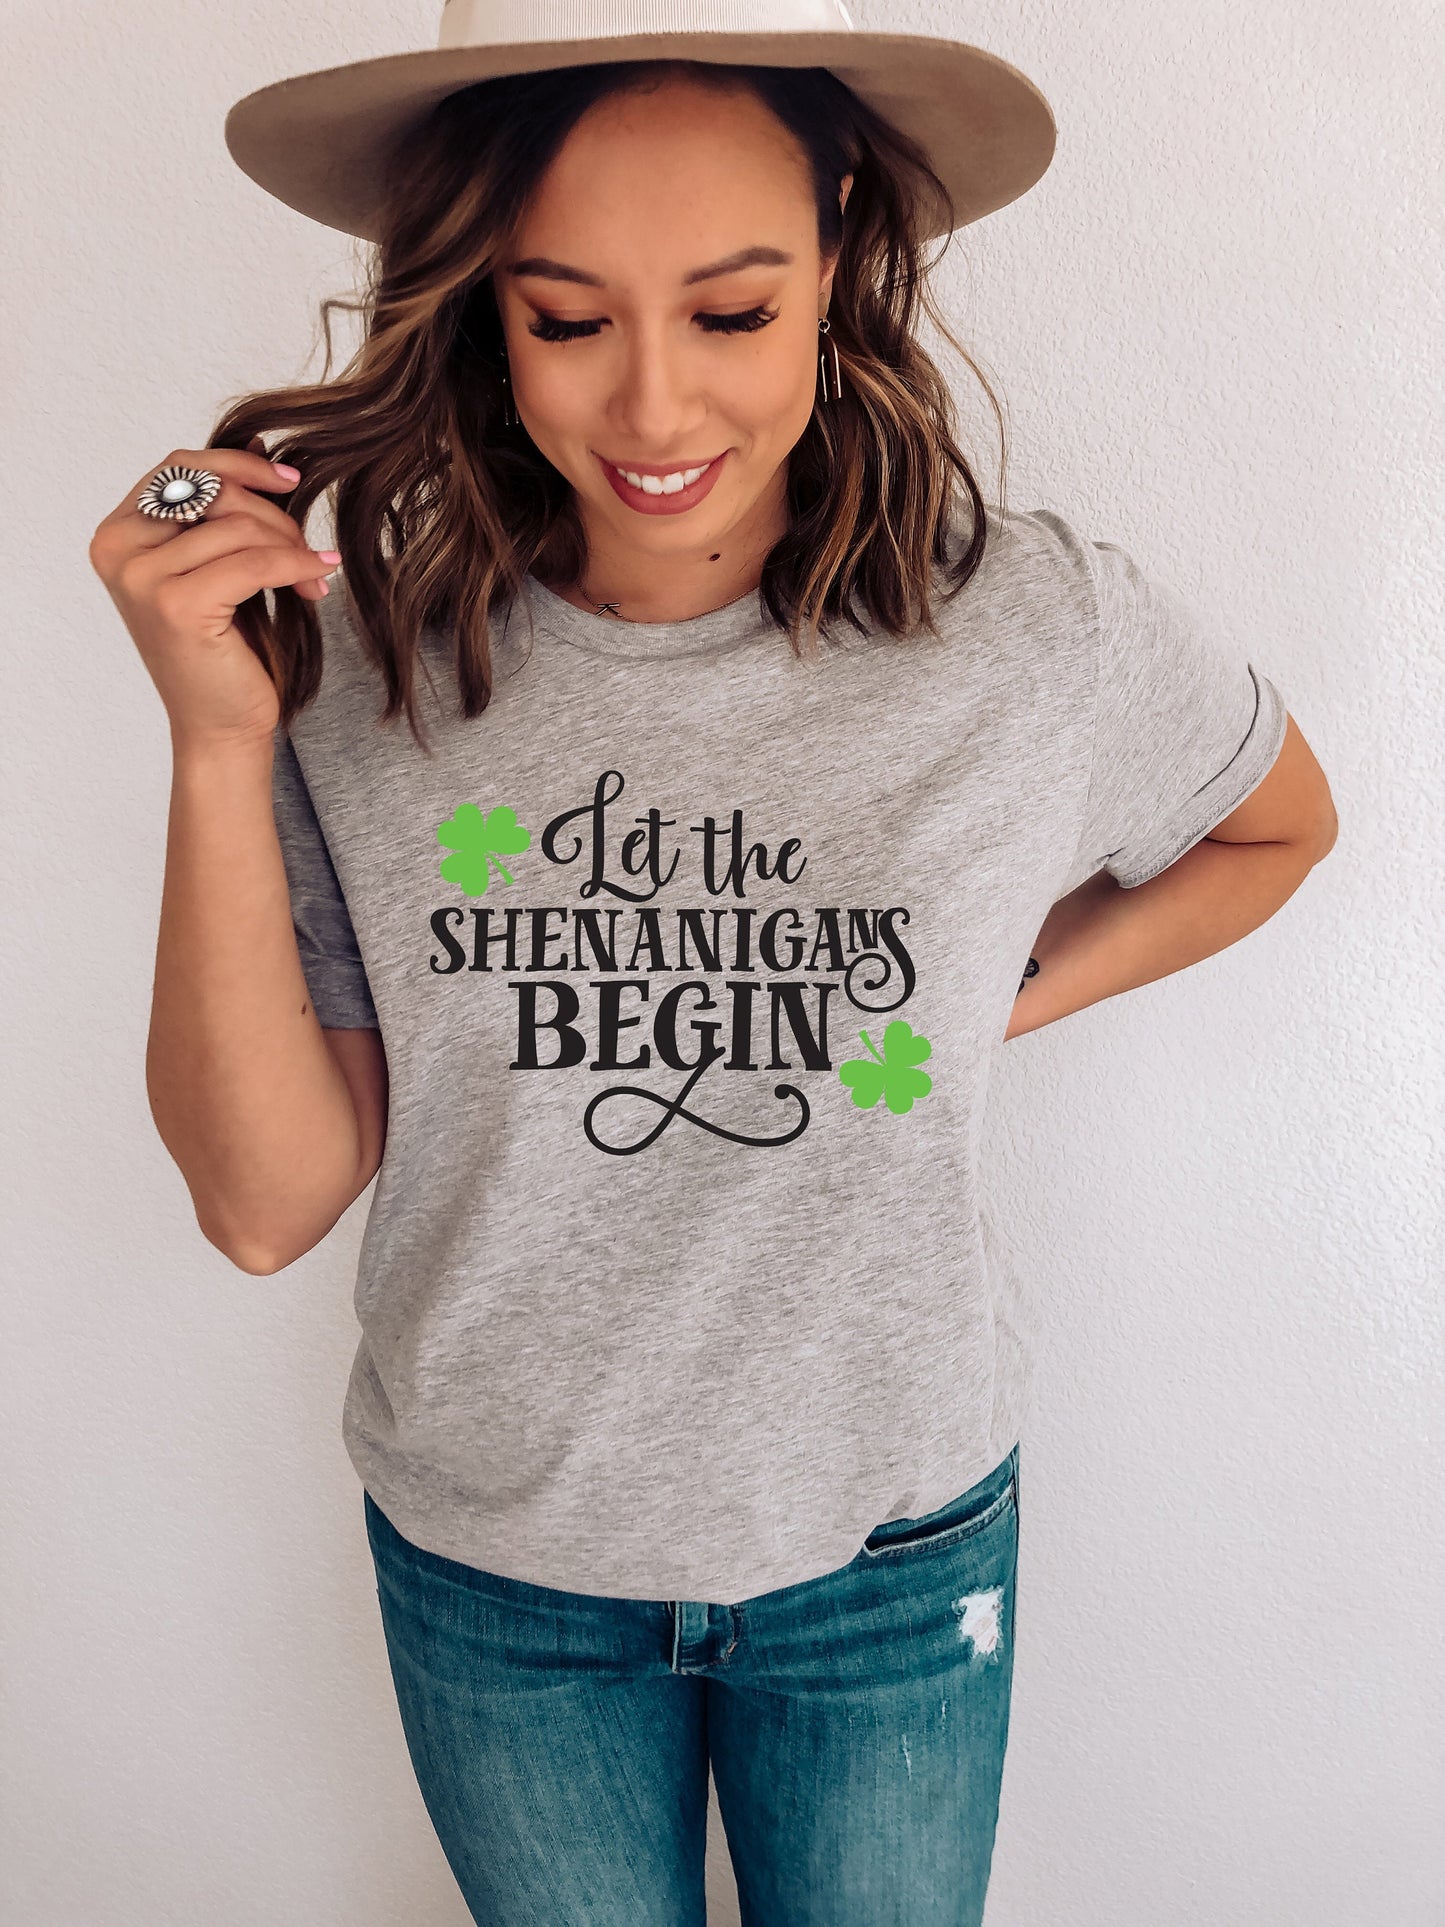 Let the Shenanigans Begin Shirt - St. Patrick's Day Shirt